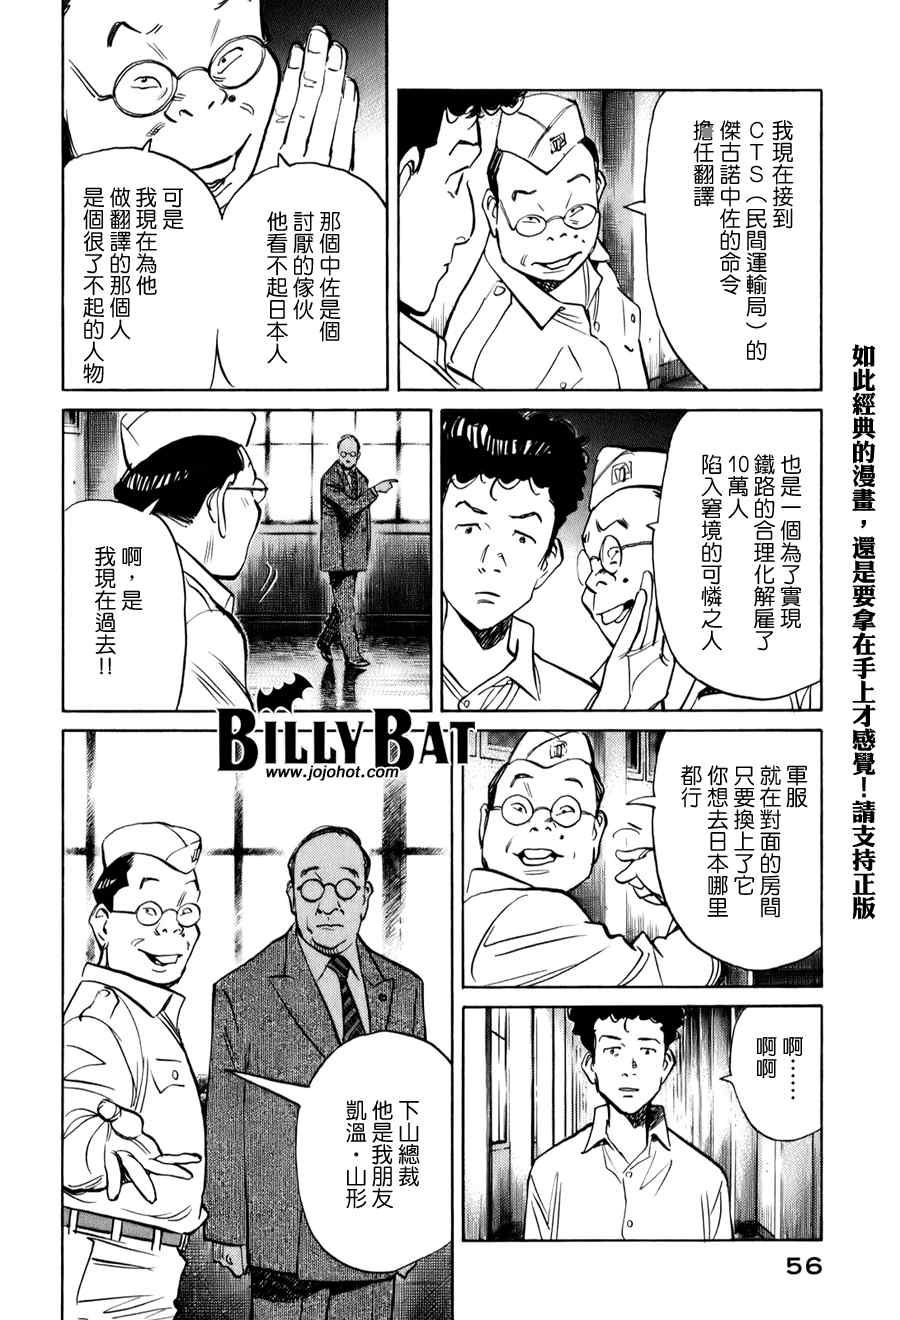 Billy_Bat - 第3话 - 4